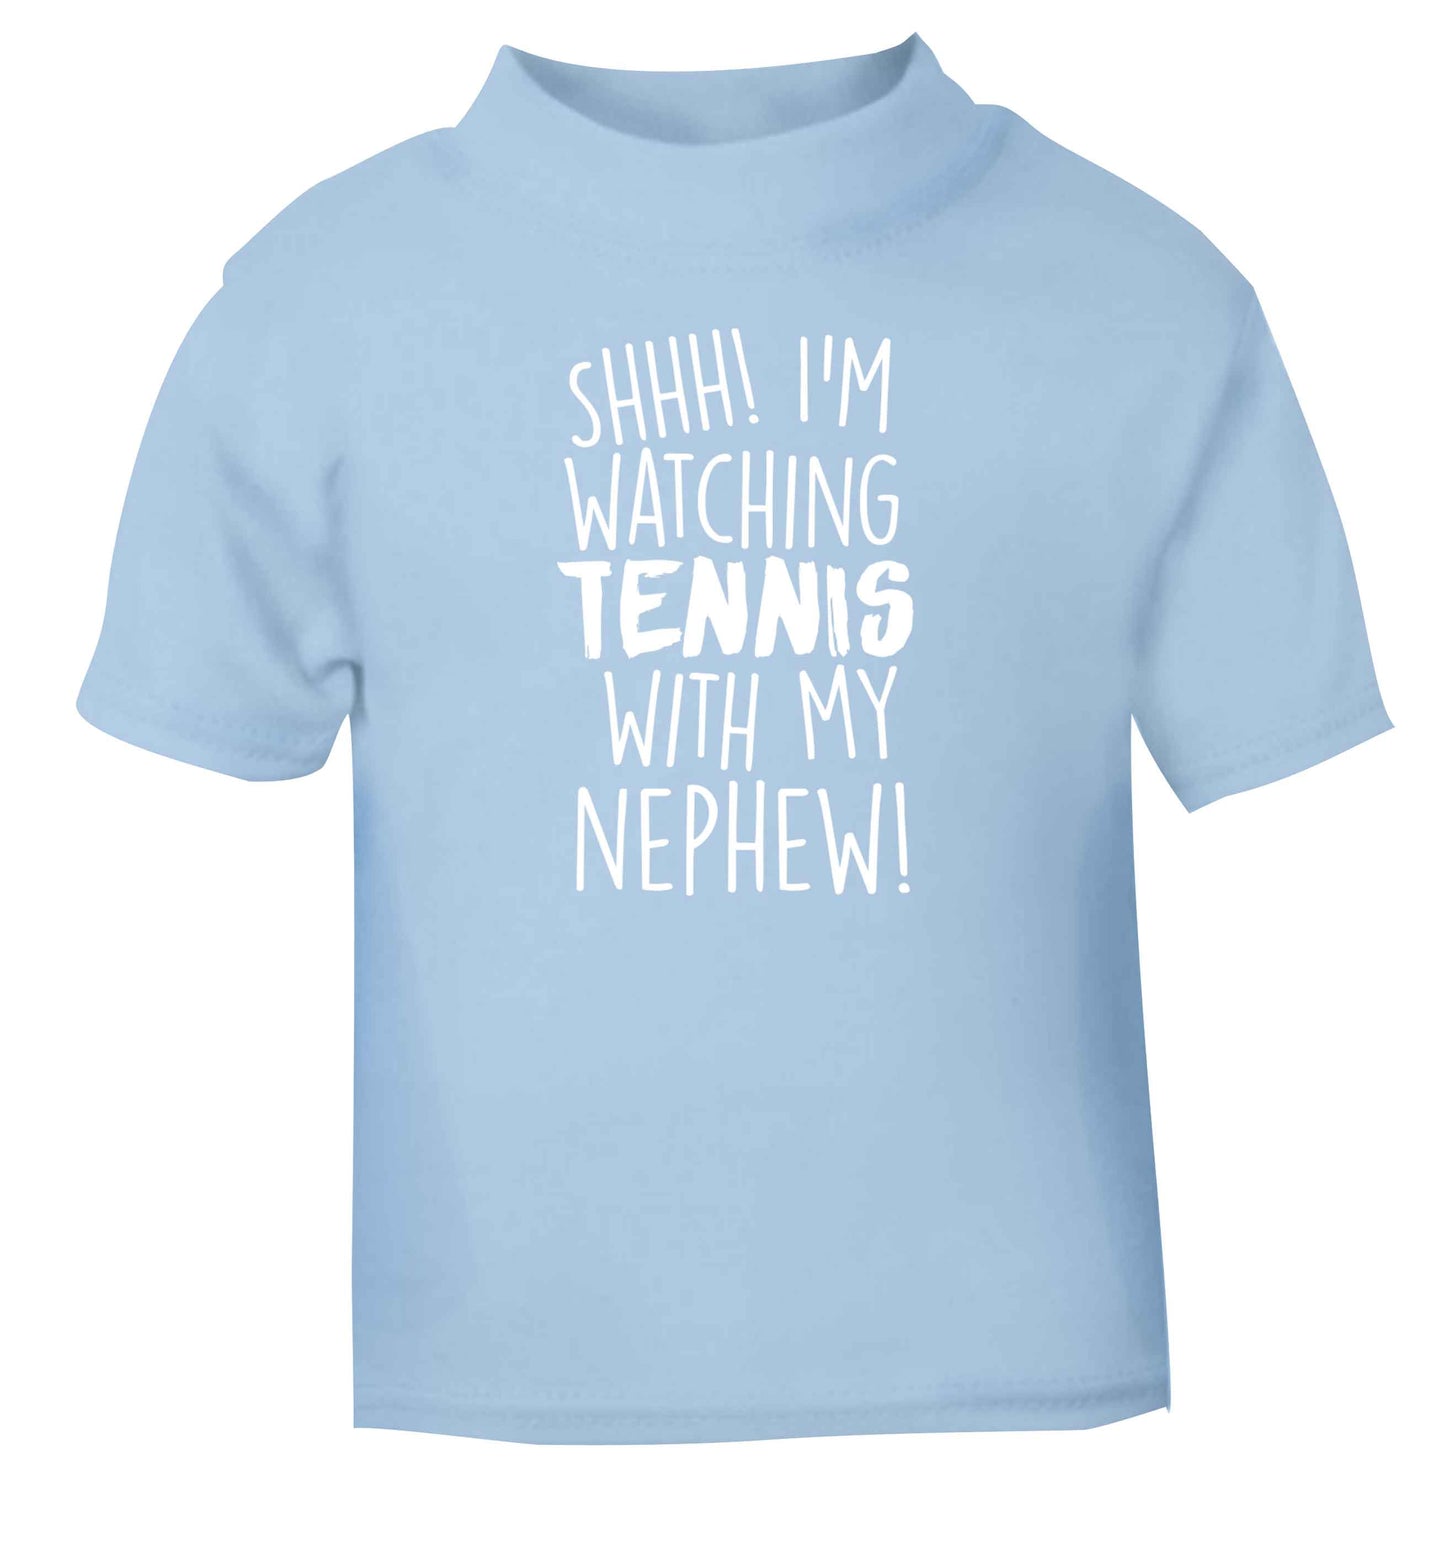 Shh! I'm watching tennis with my nephew! light blue Baby Toddler Tshirt 2 Years